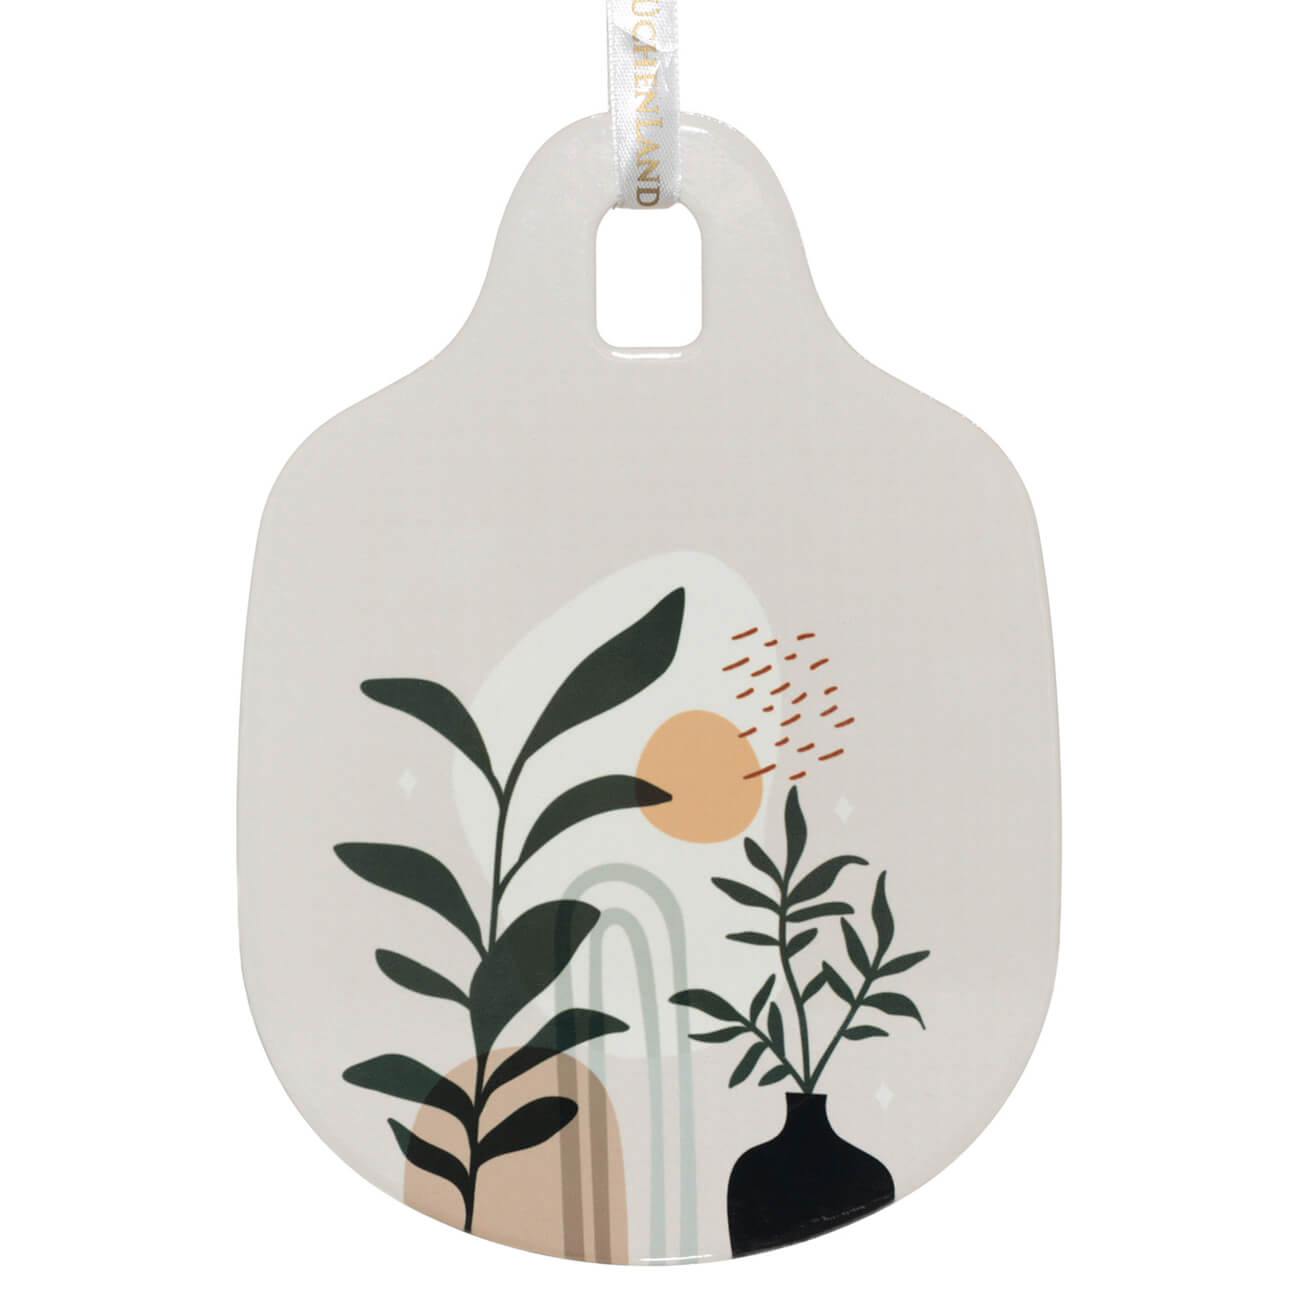 Hot plate, 15x21 cm, ceramic / cork, beige, Plants, Abstract изображение № 1